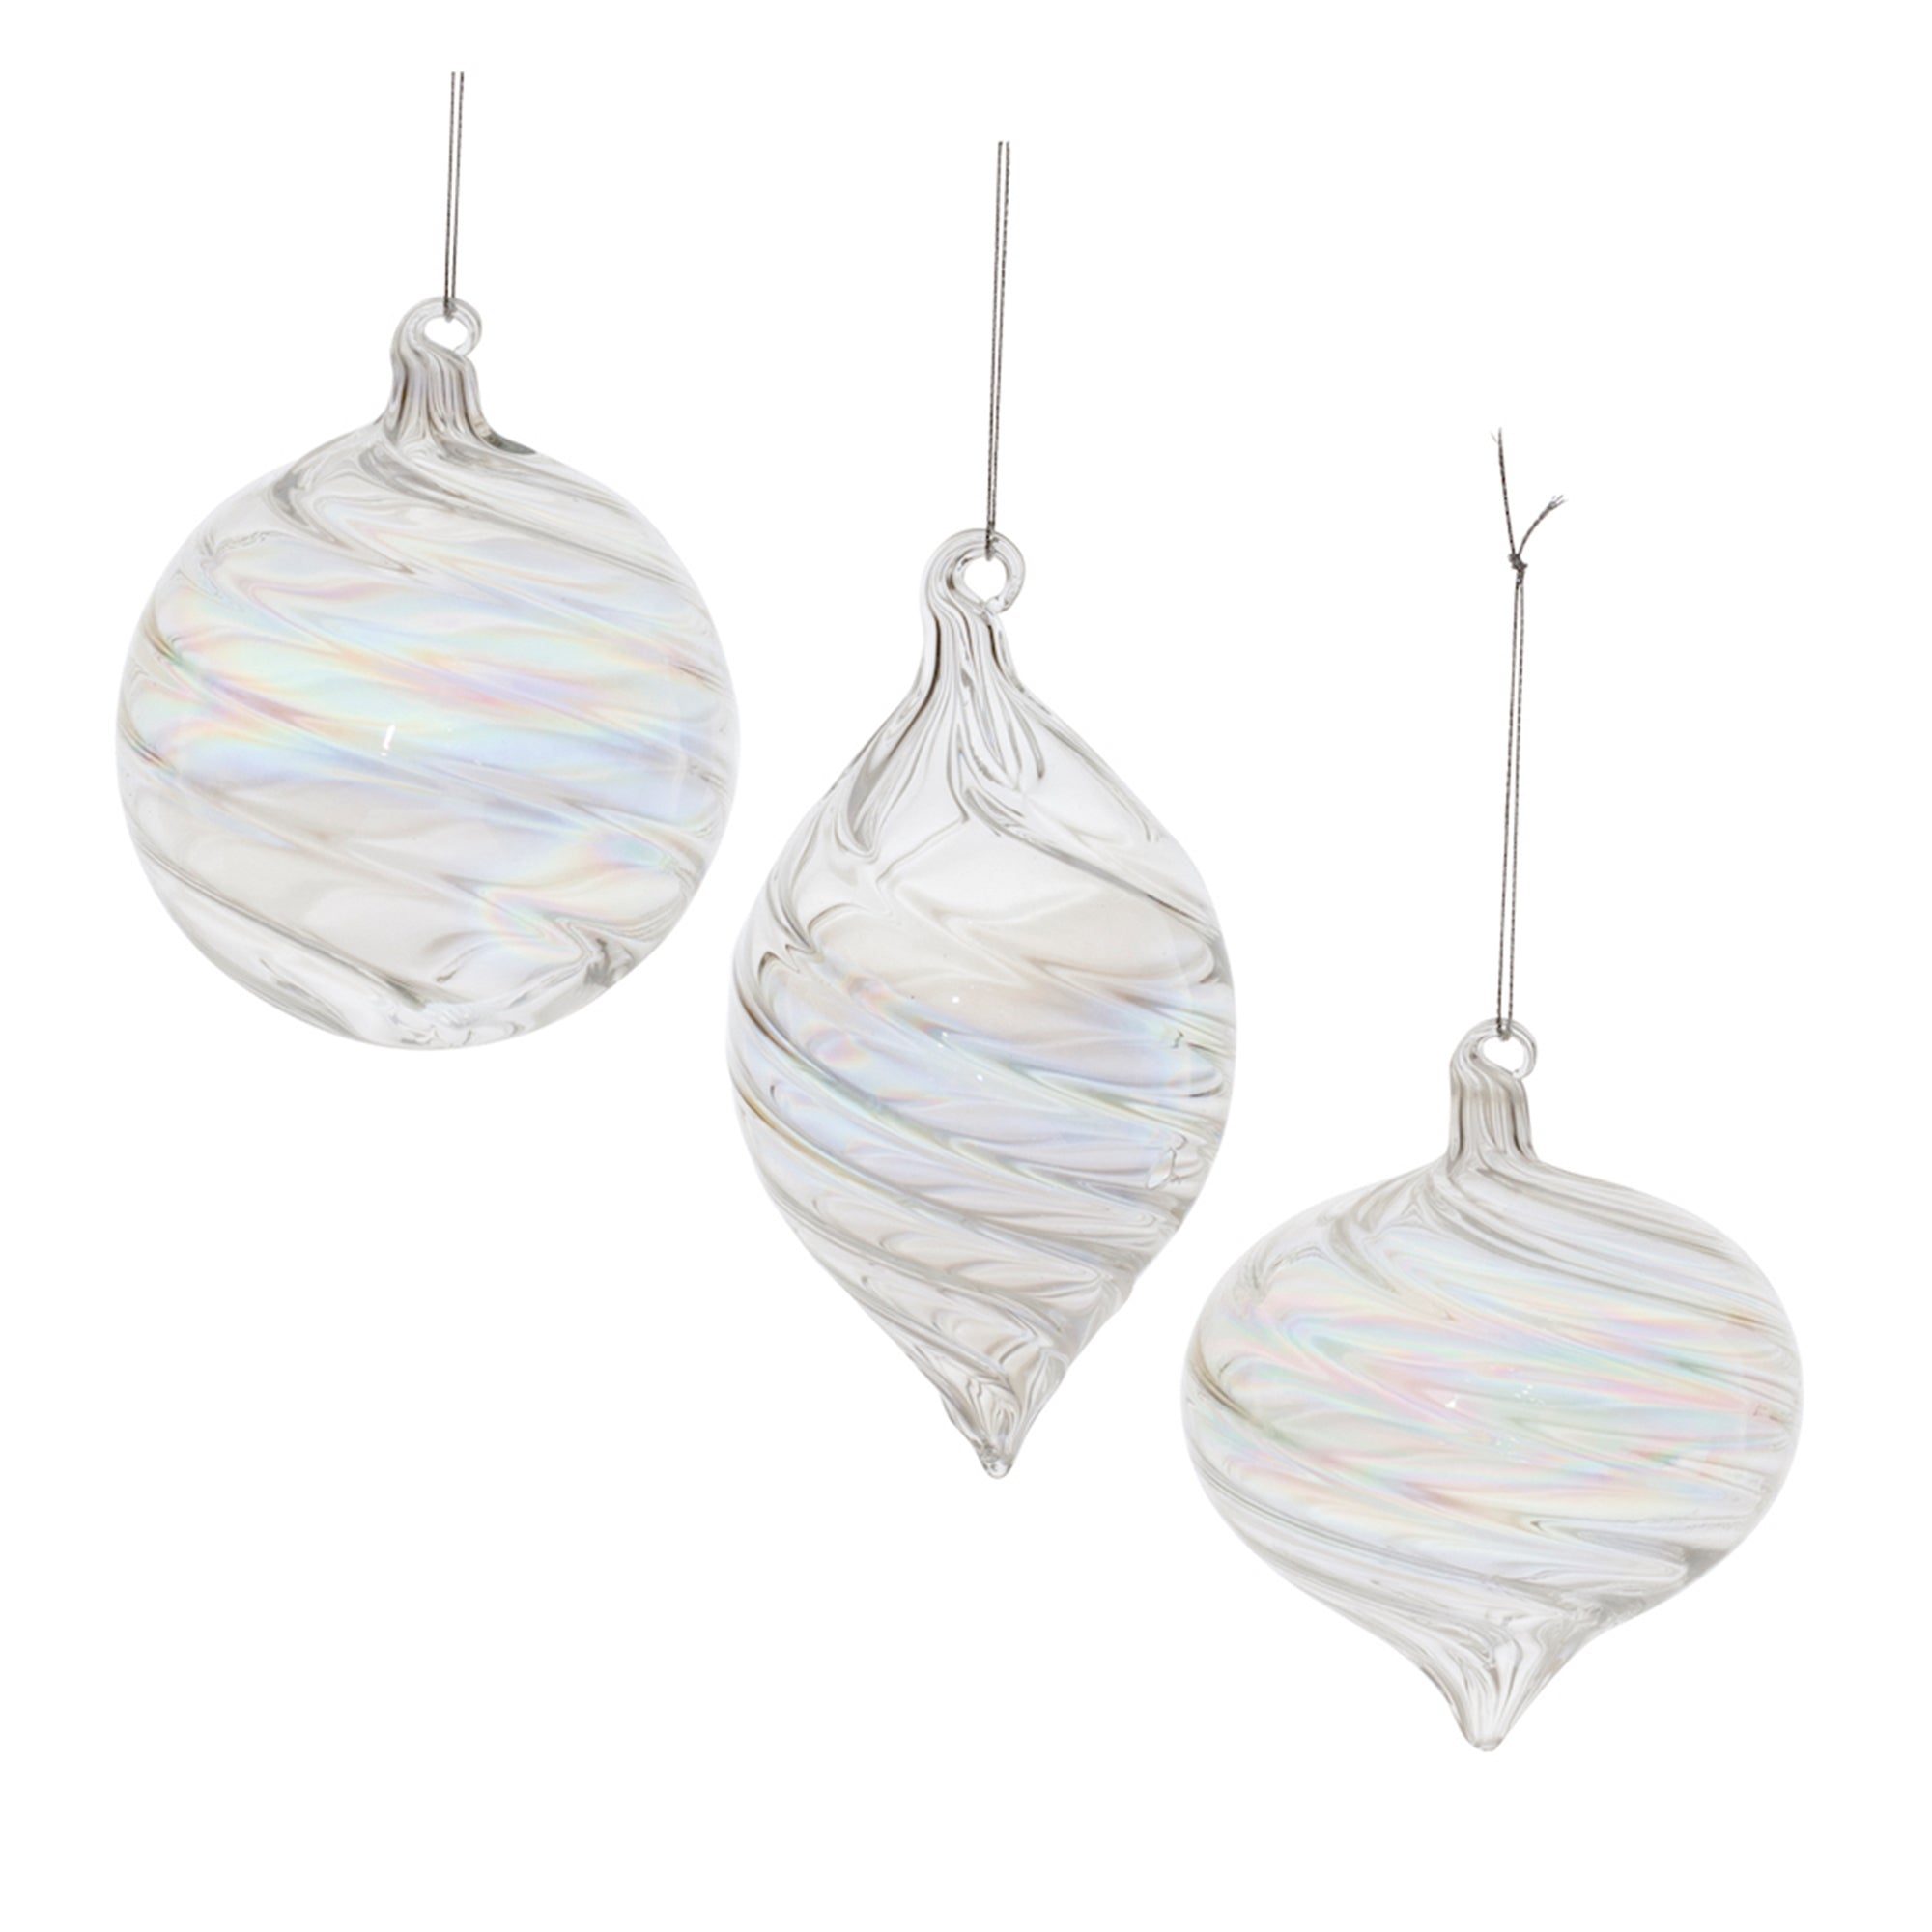 Iridescent Swirl Glass Ornament (Set of 6)